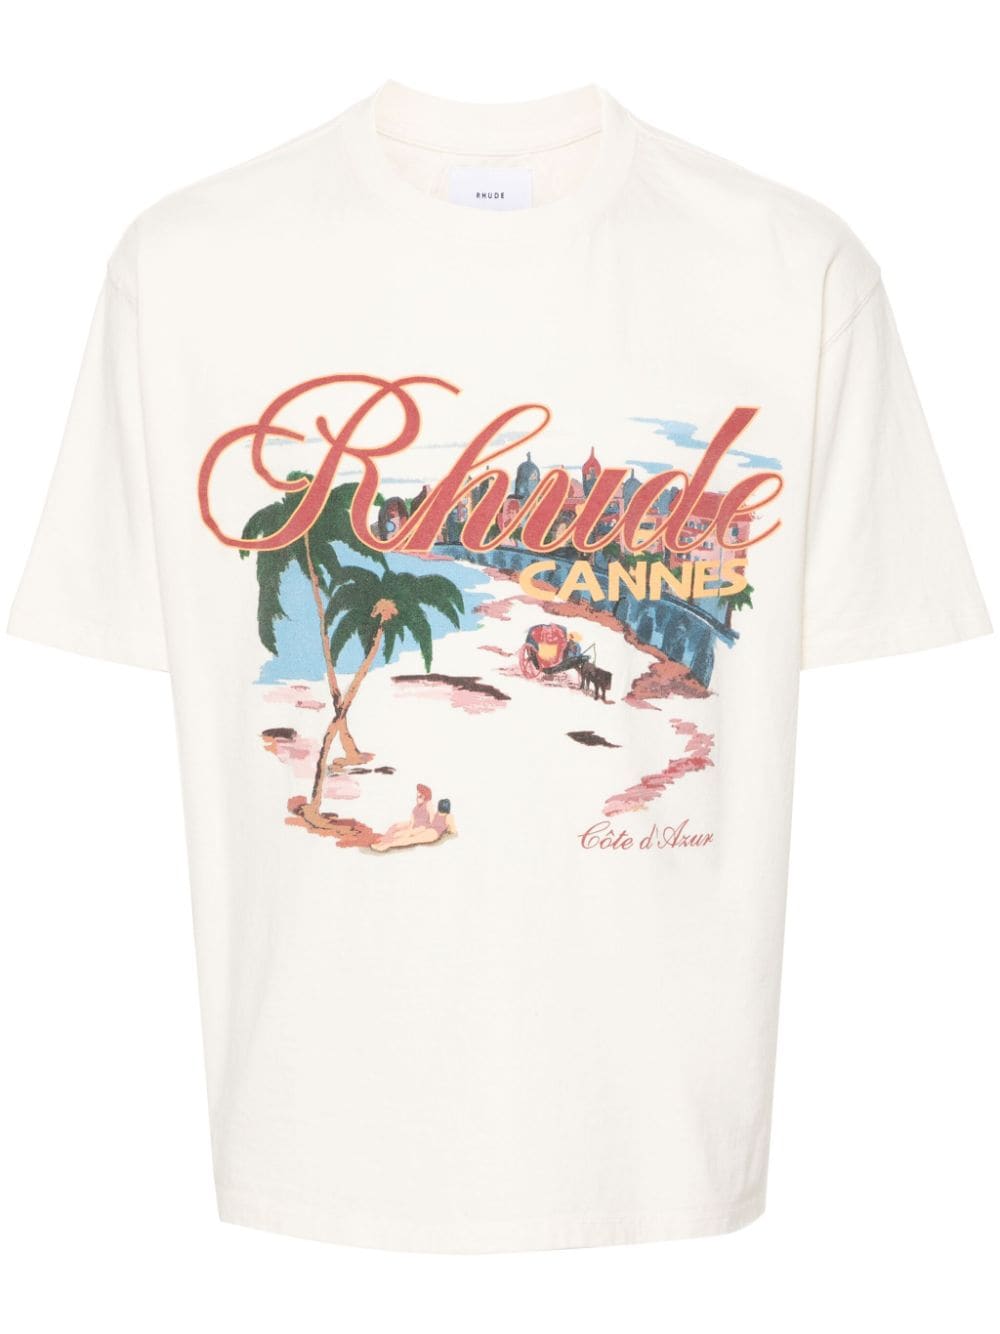 Cannes Beach cotton T-shirt